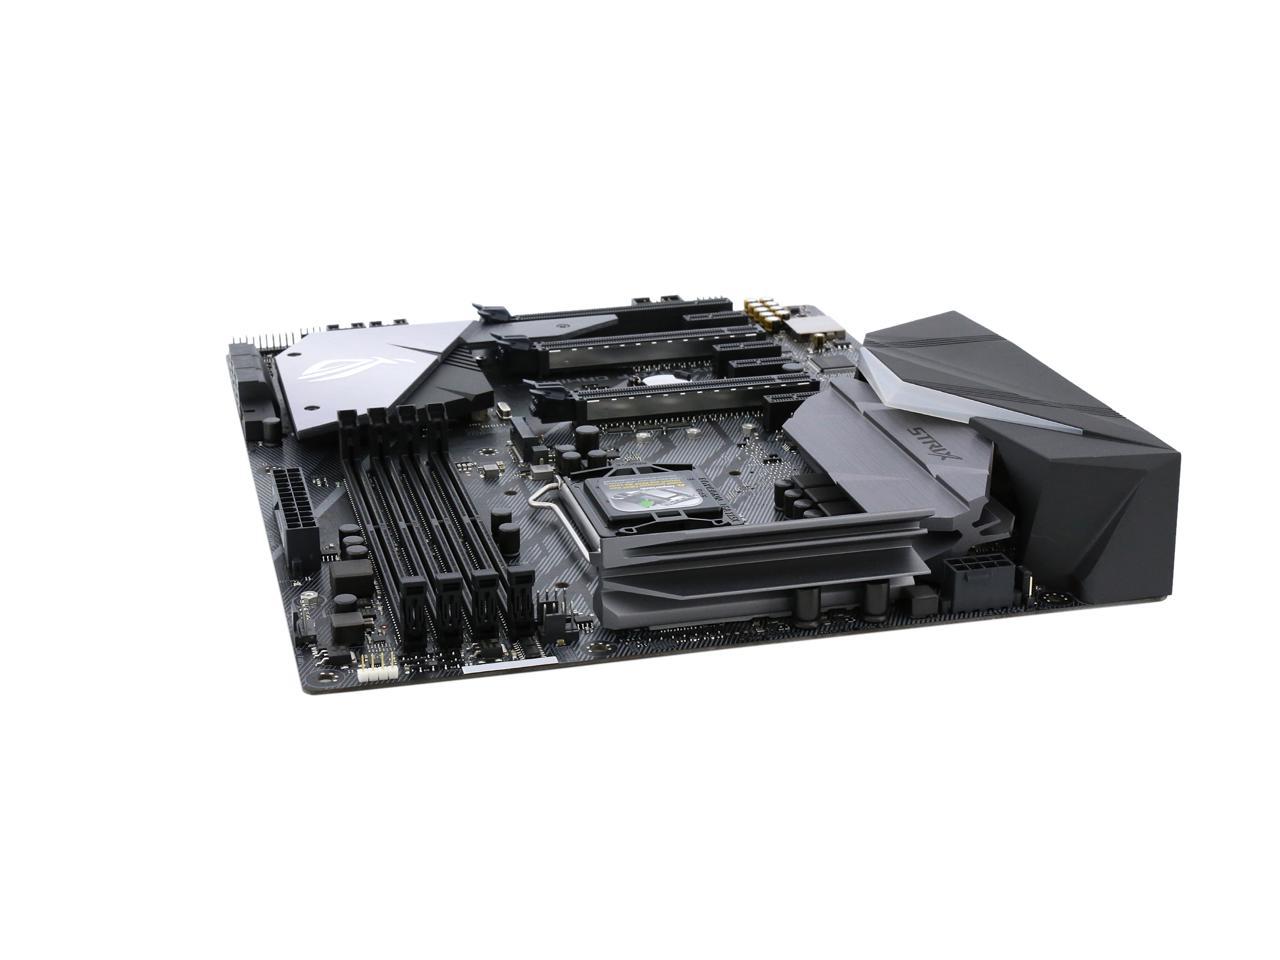 Asus Rog Strix Z370 F Gaming Lga 1151 300 Series Atx Intel Motherboard Newegg Com